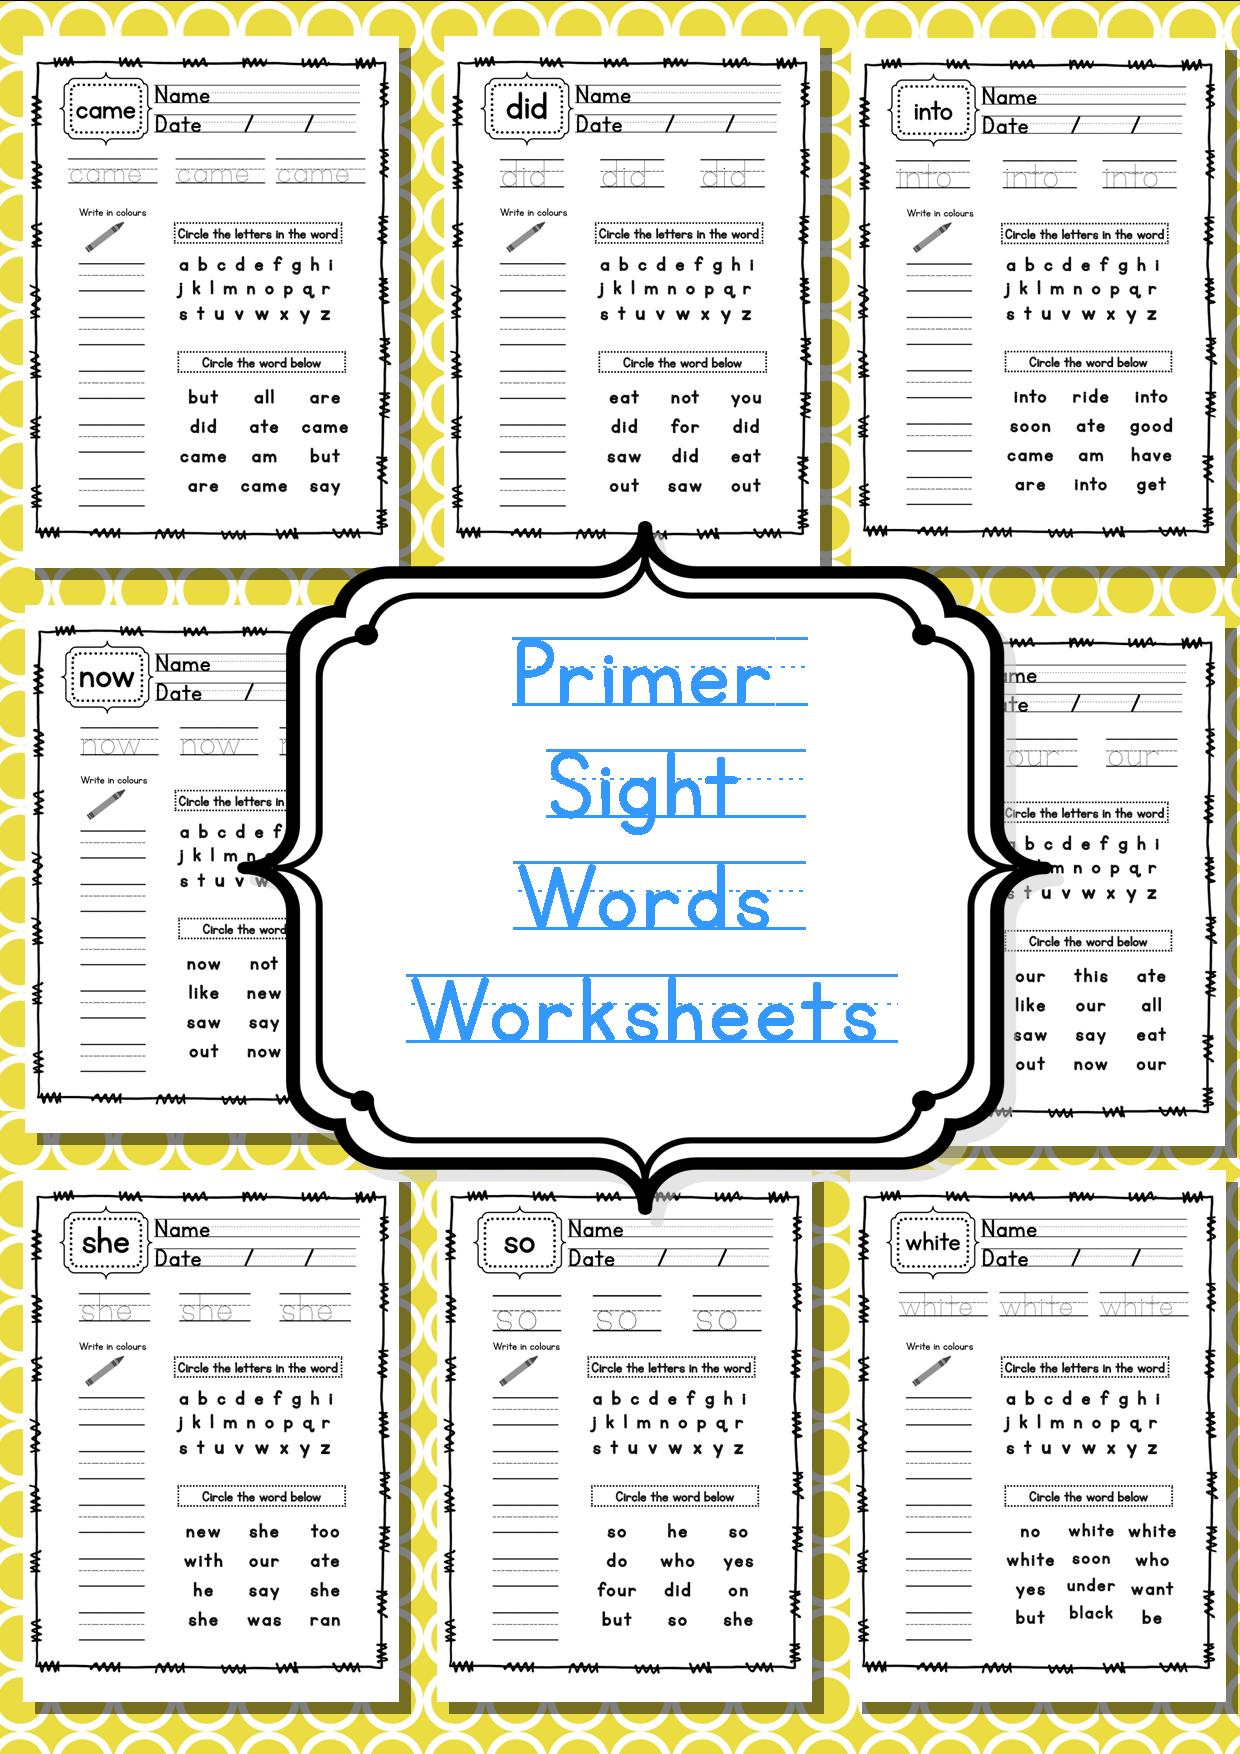 worksheets Word Sight   Pdf: Worksheets kindergarten Primer sight Sight Worksheets Teaching  fry word Word